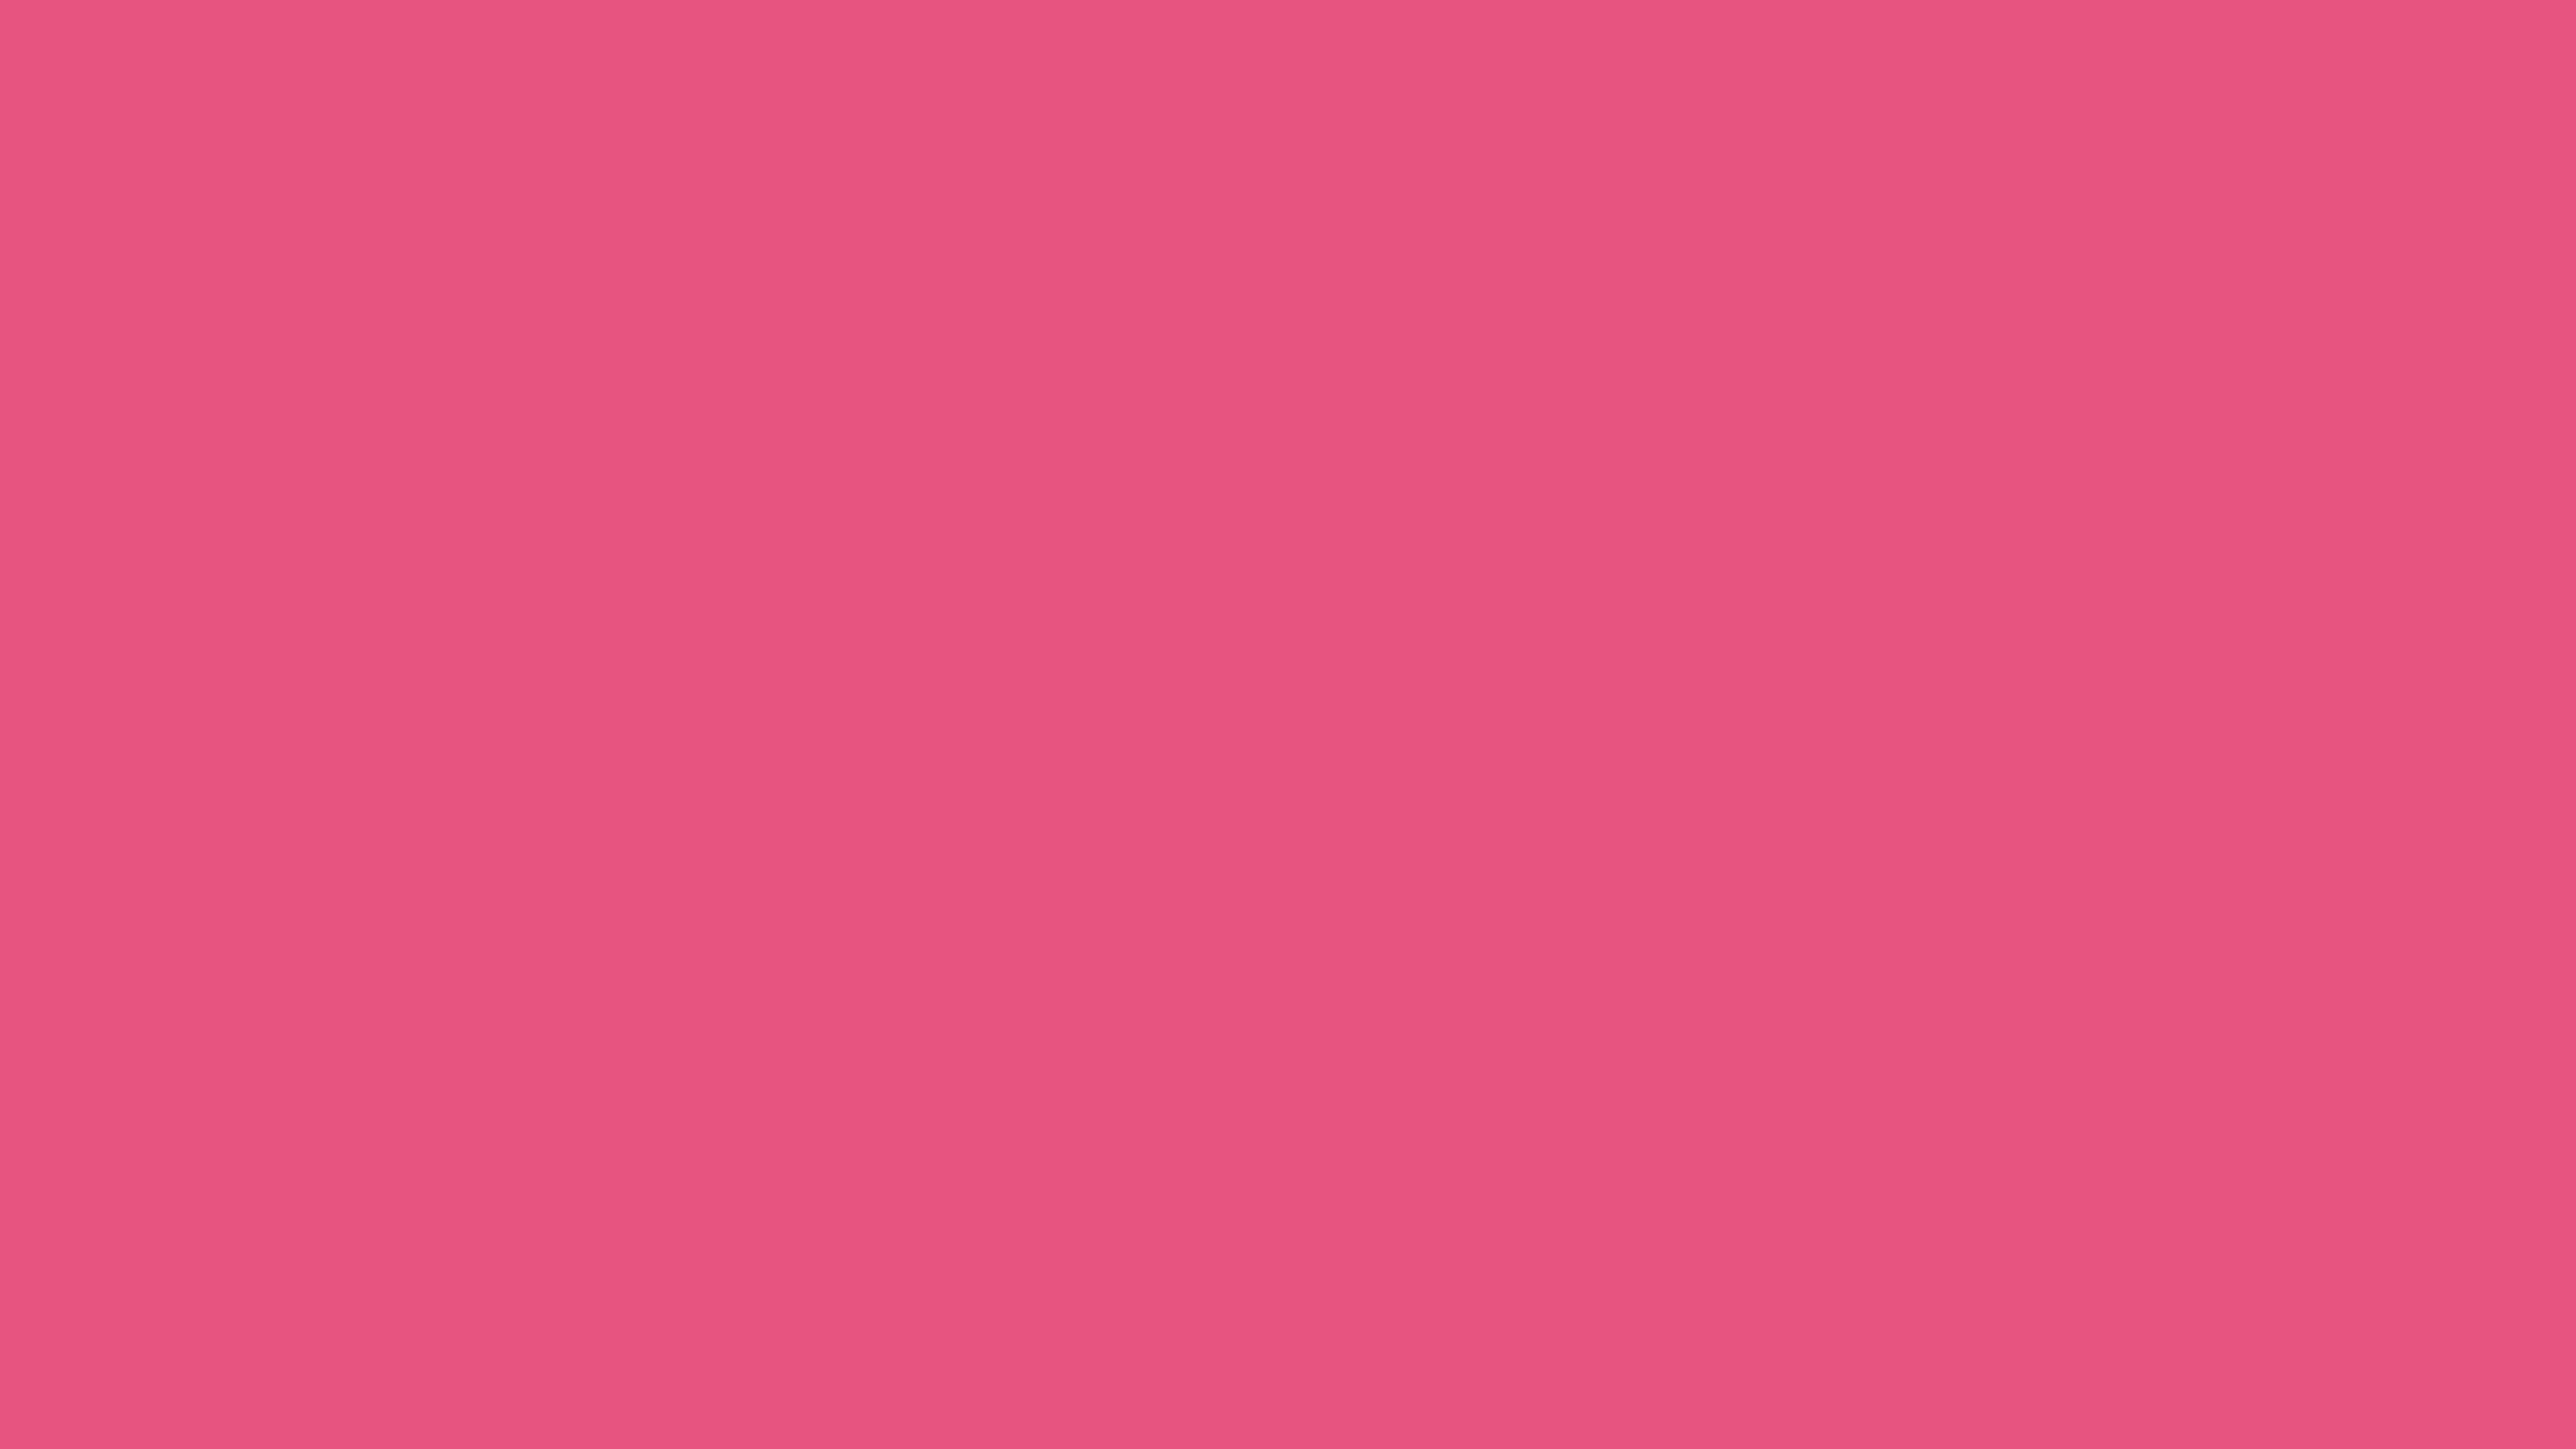 4096x2304 Dark Pink Solid Color Background